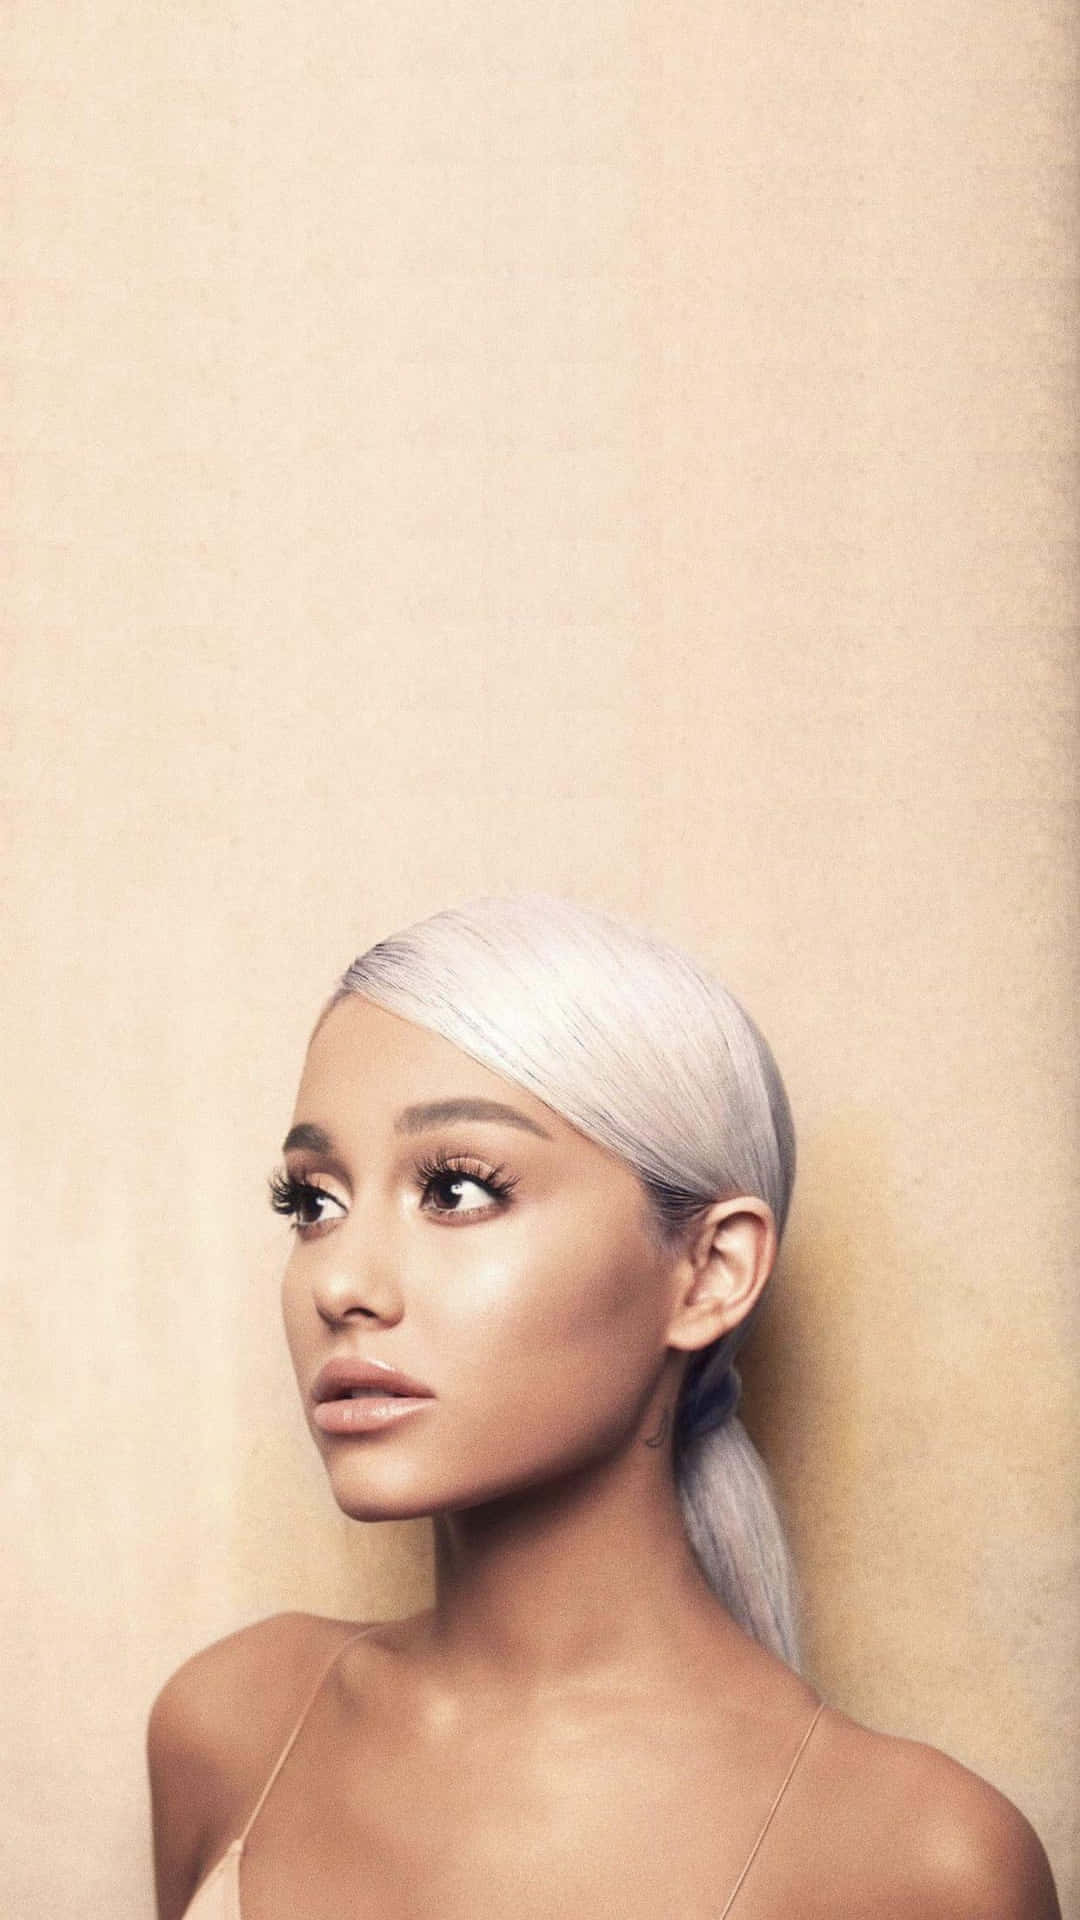 100+] Aesthetic Ariana Grande Wallpapers